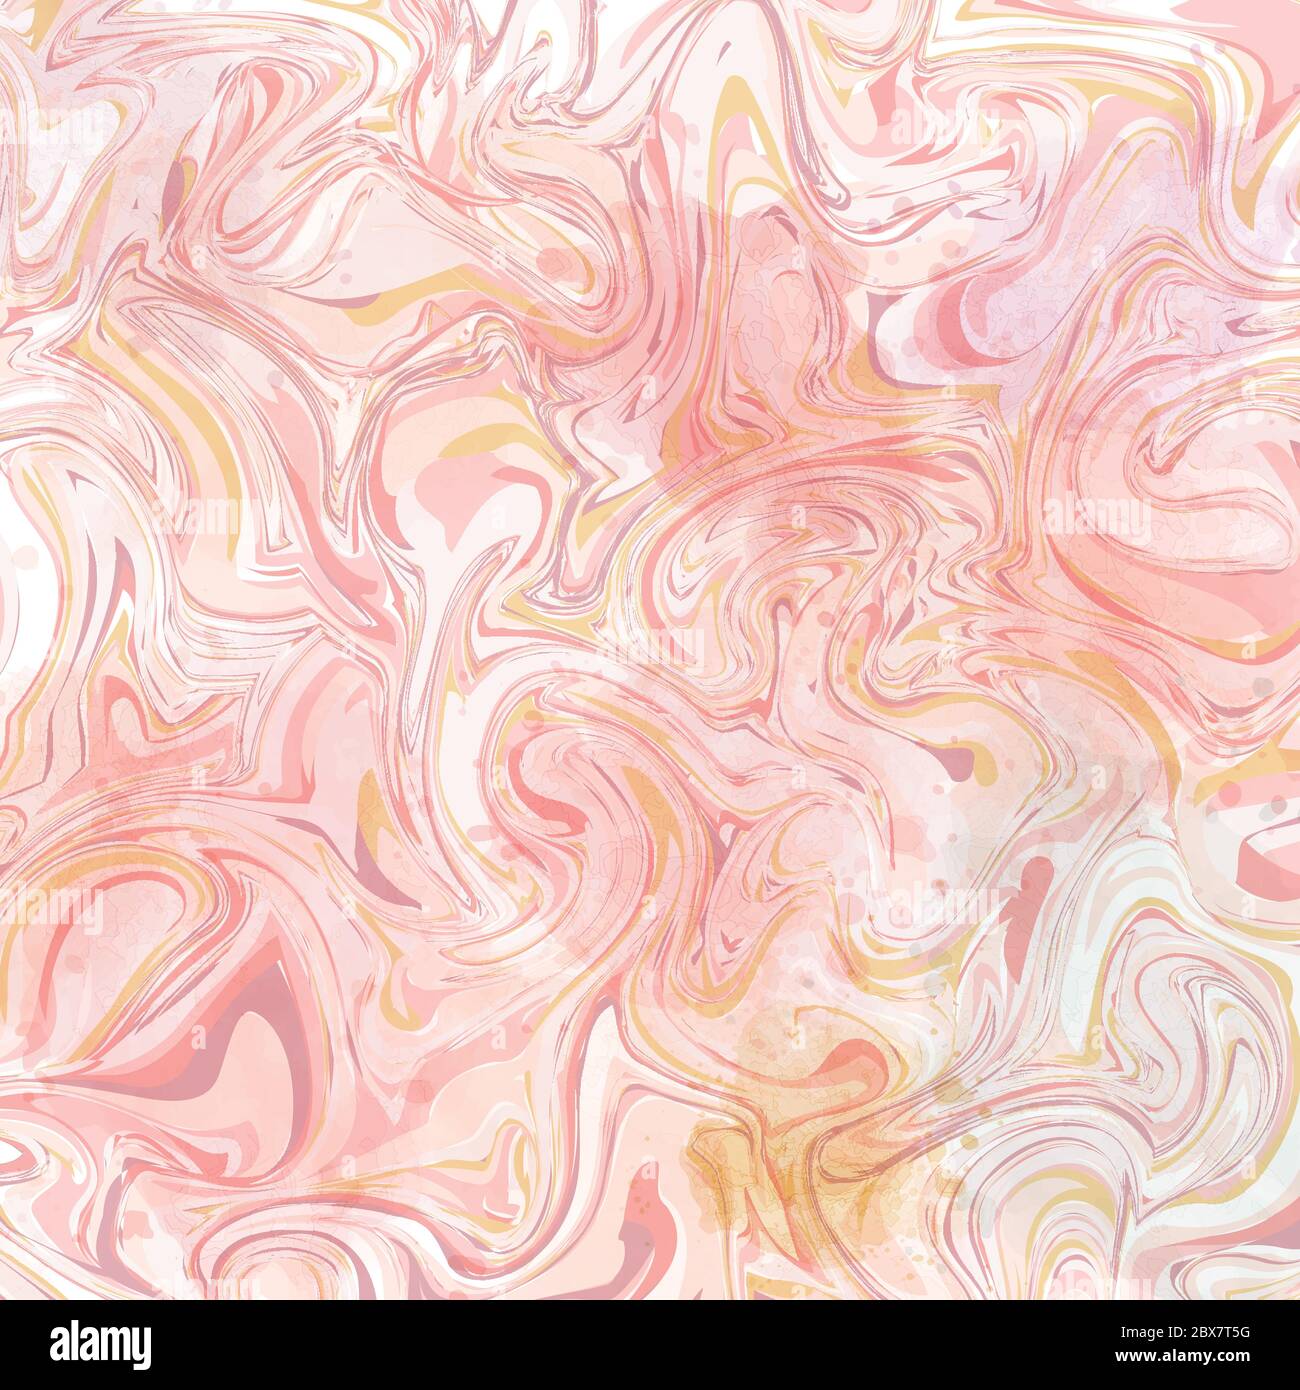 Abstrakt flüssige rosa Marmor-Effekt Hintergrund. Vektorformat Stock Vektor